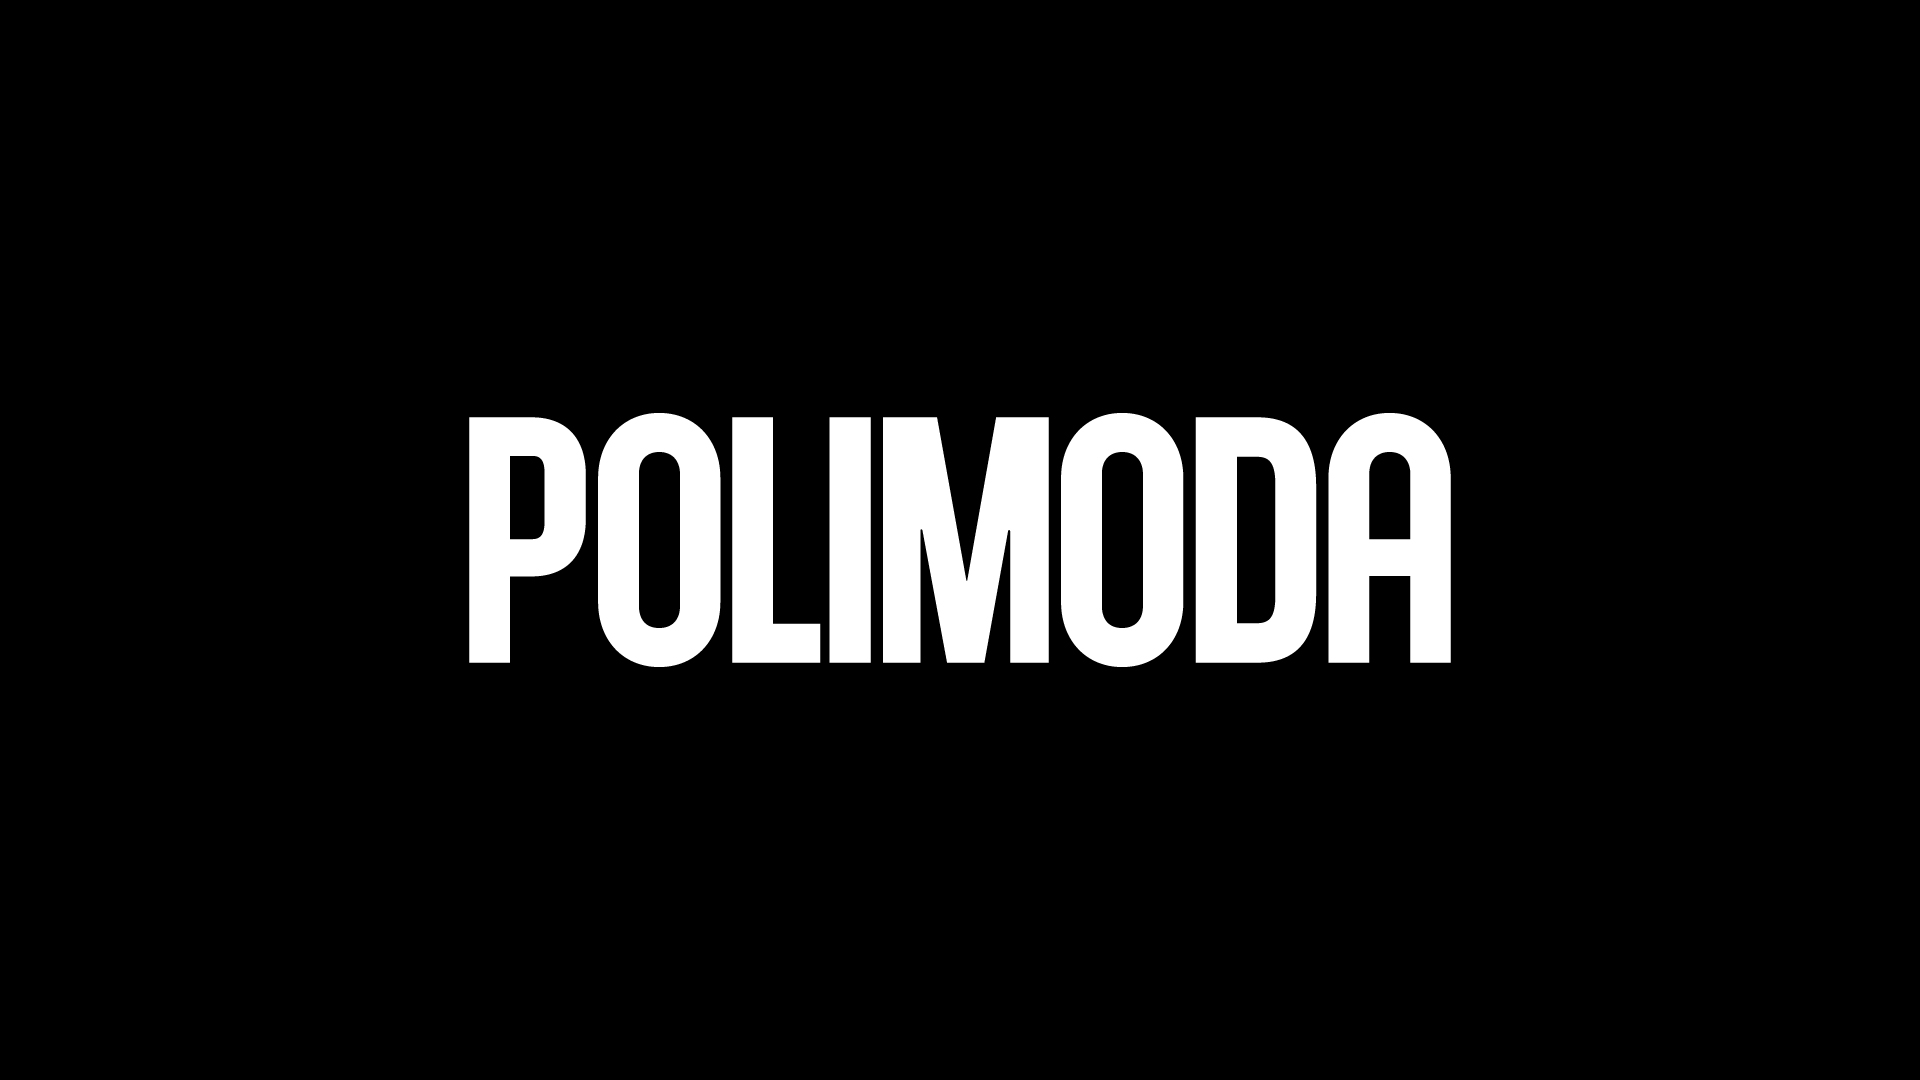 Study in Polimoda with Scholarship